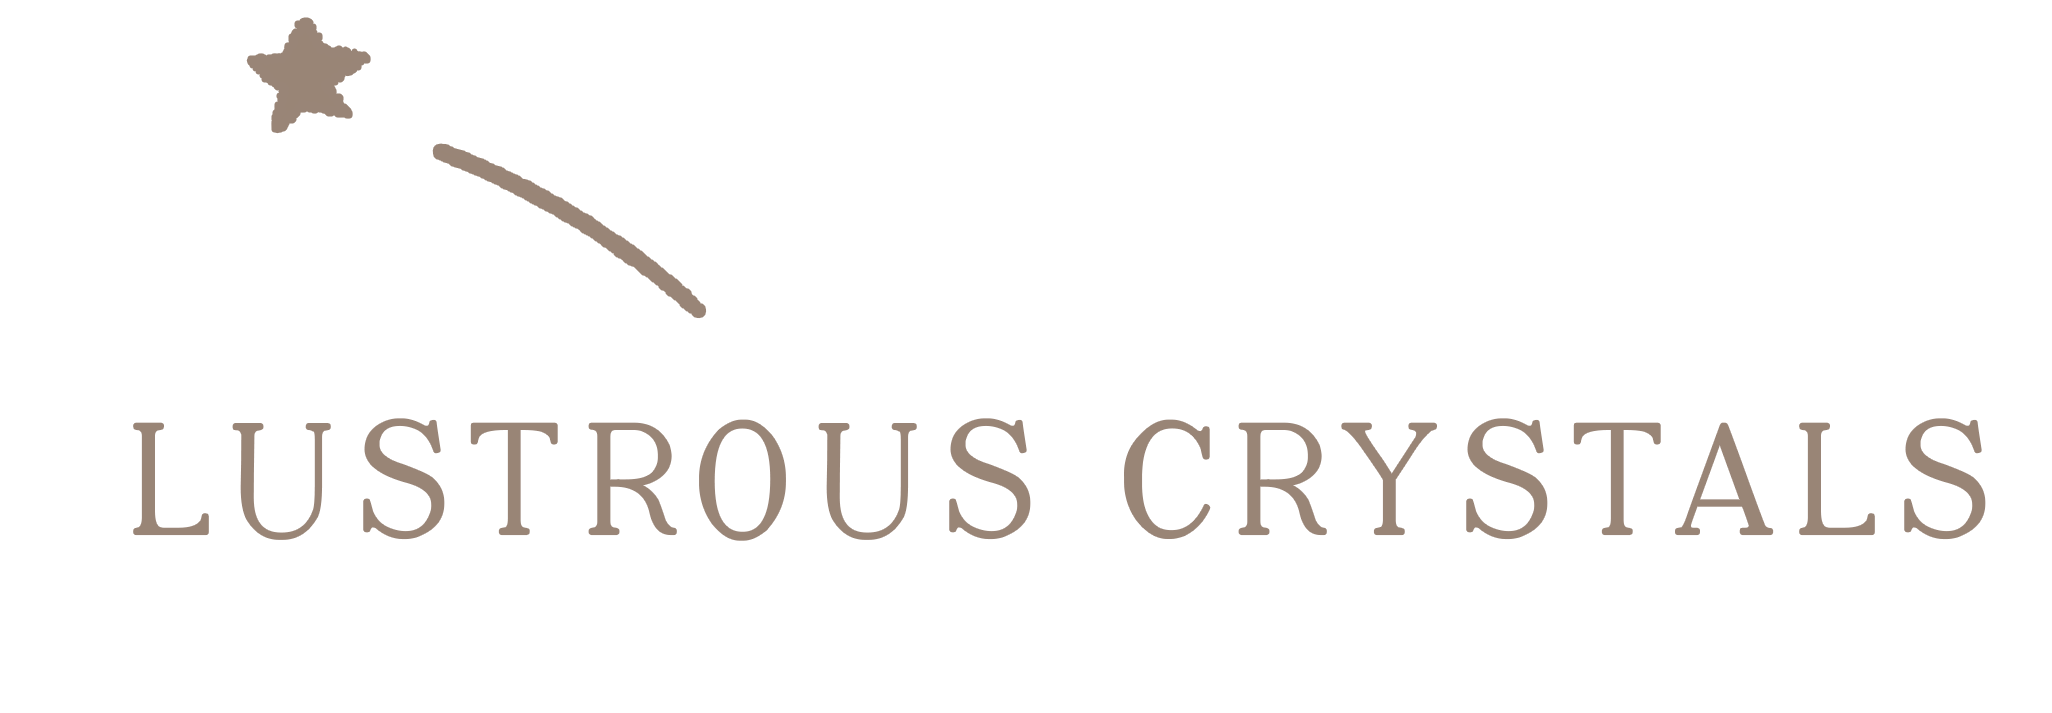 LustrousCrystals Promo Code 